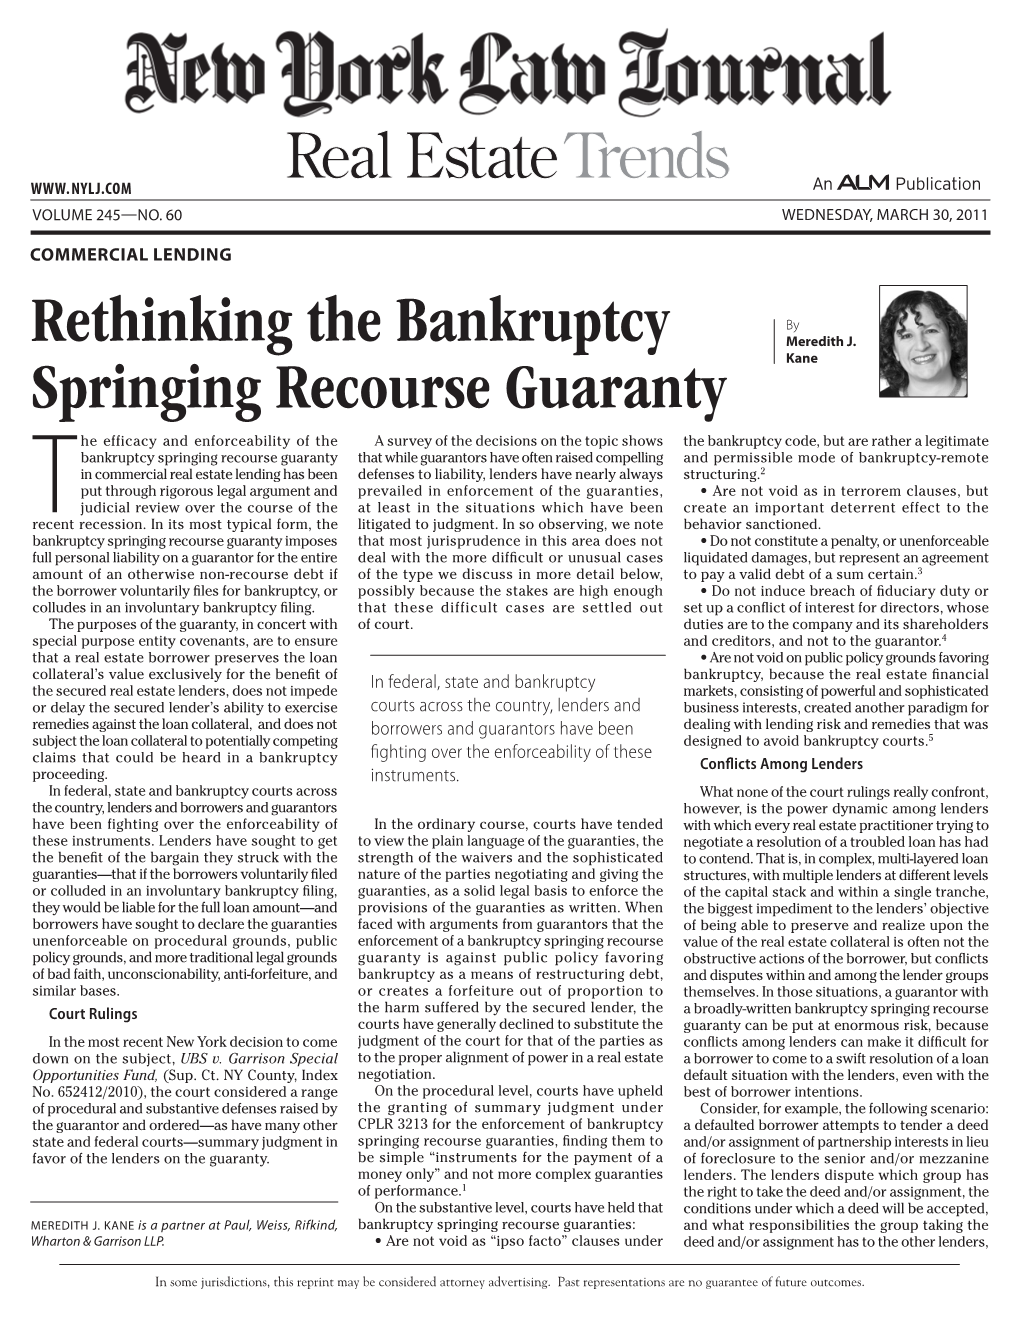 Rethinking the Bankruptcy Springing Recourse Guaranty